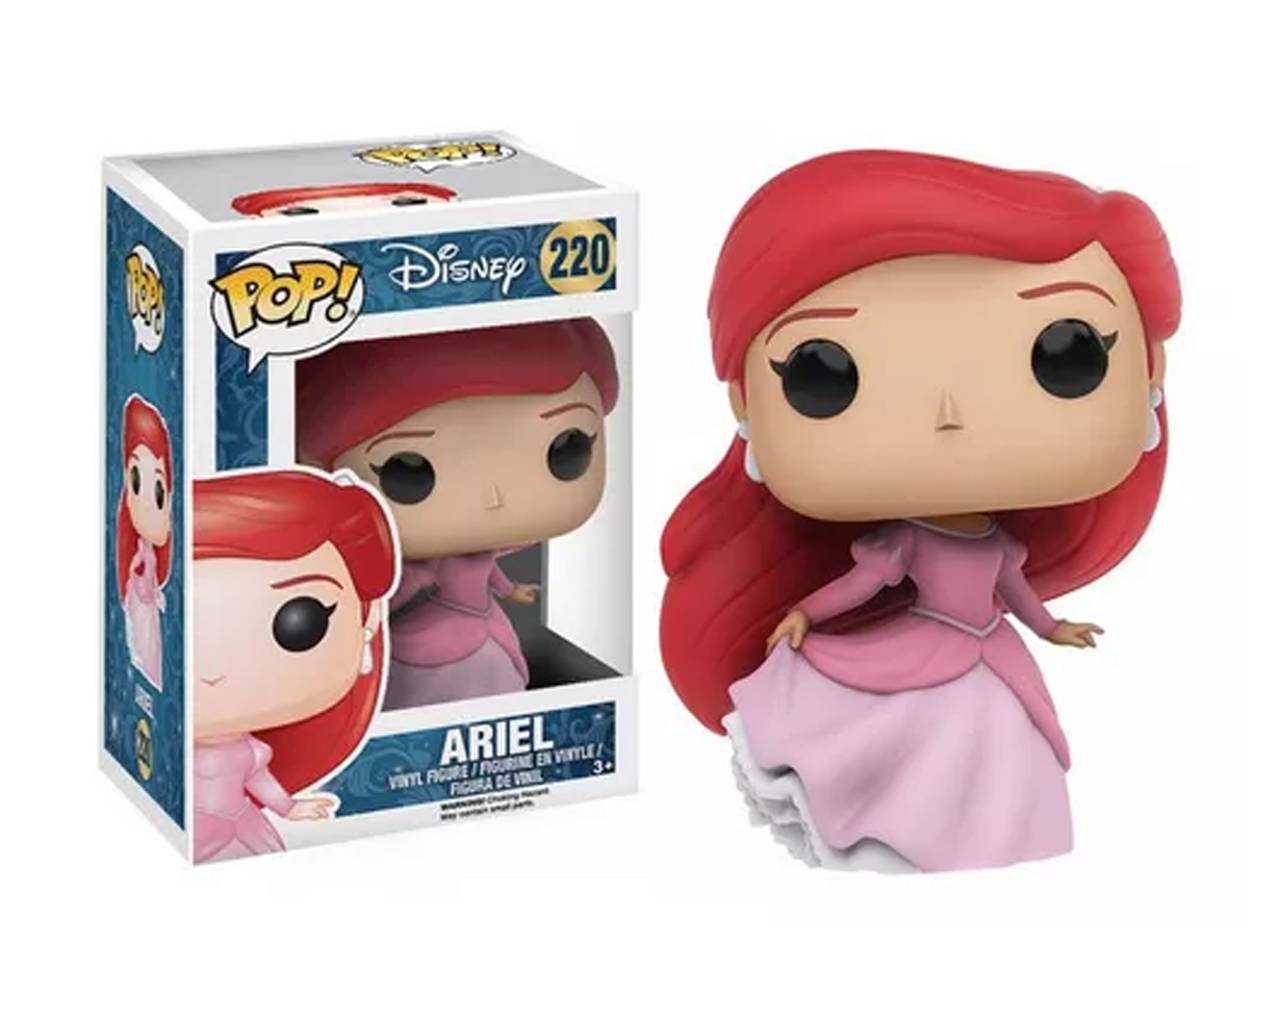 Ariel (Pink Dress) - Disney Princess The Little Mermaid Pop! Vinyl